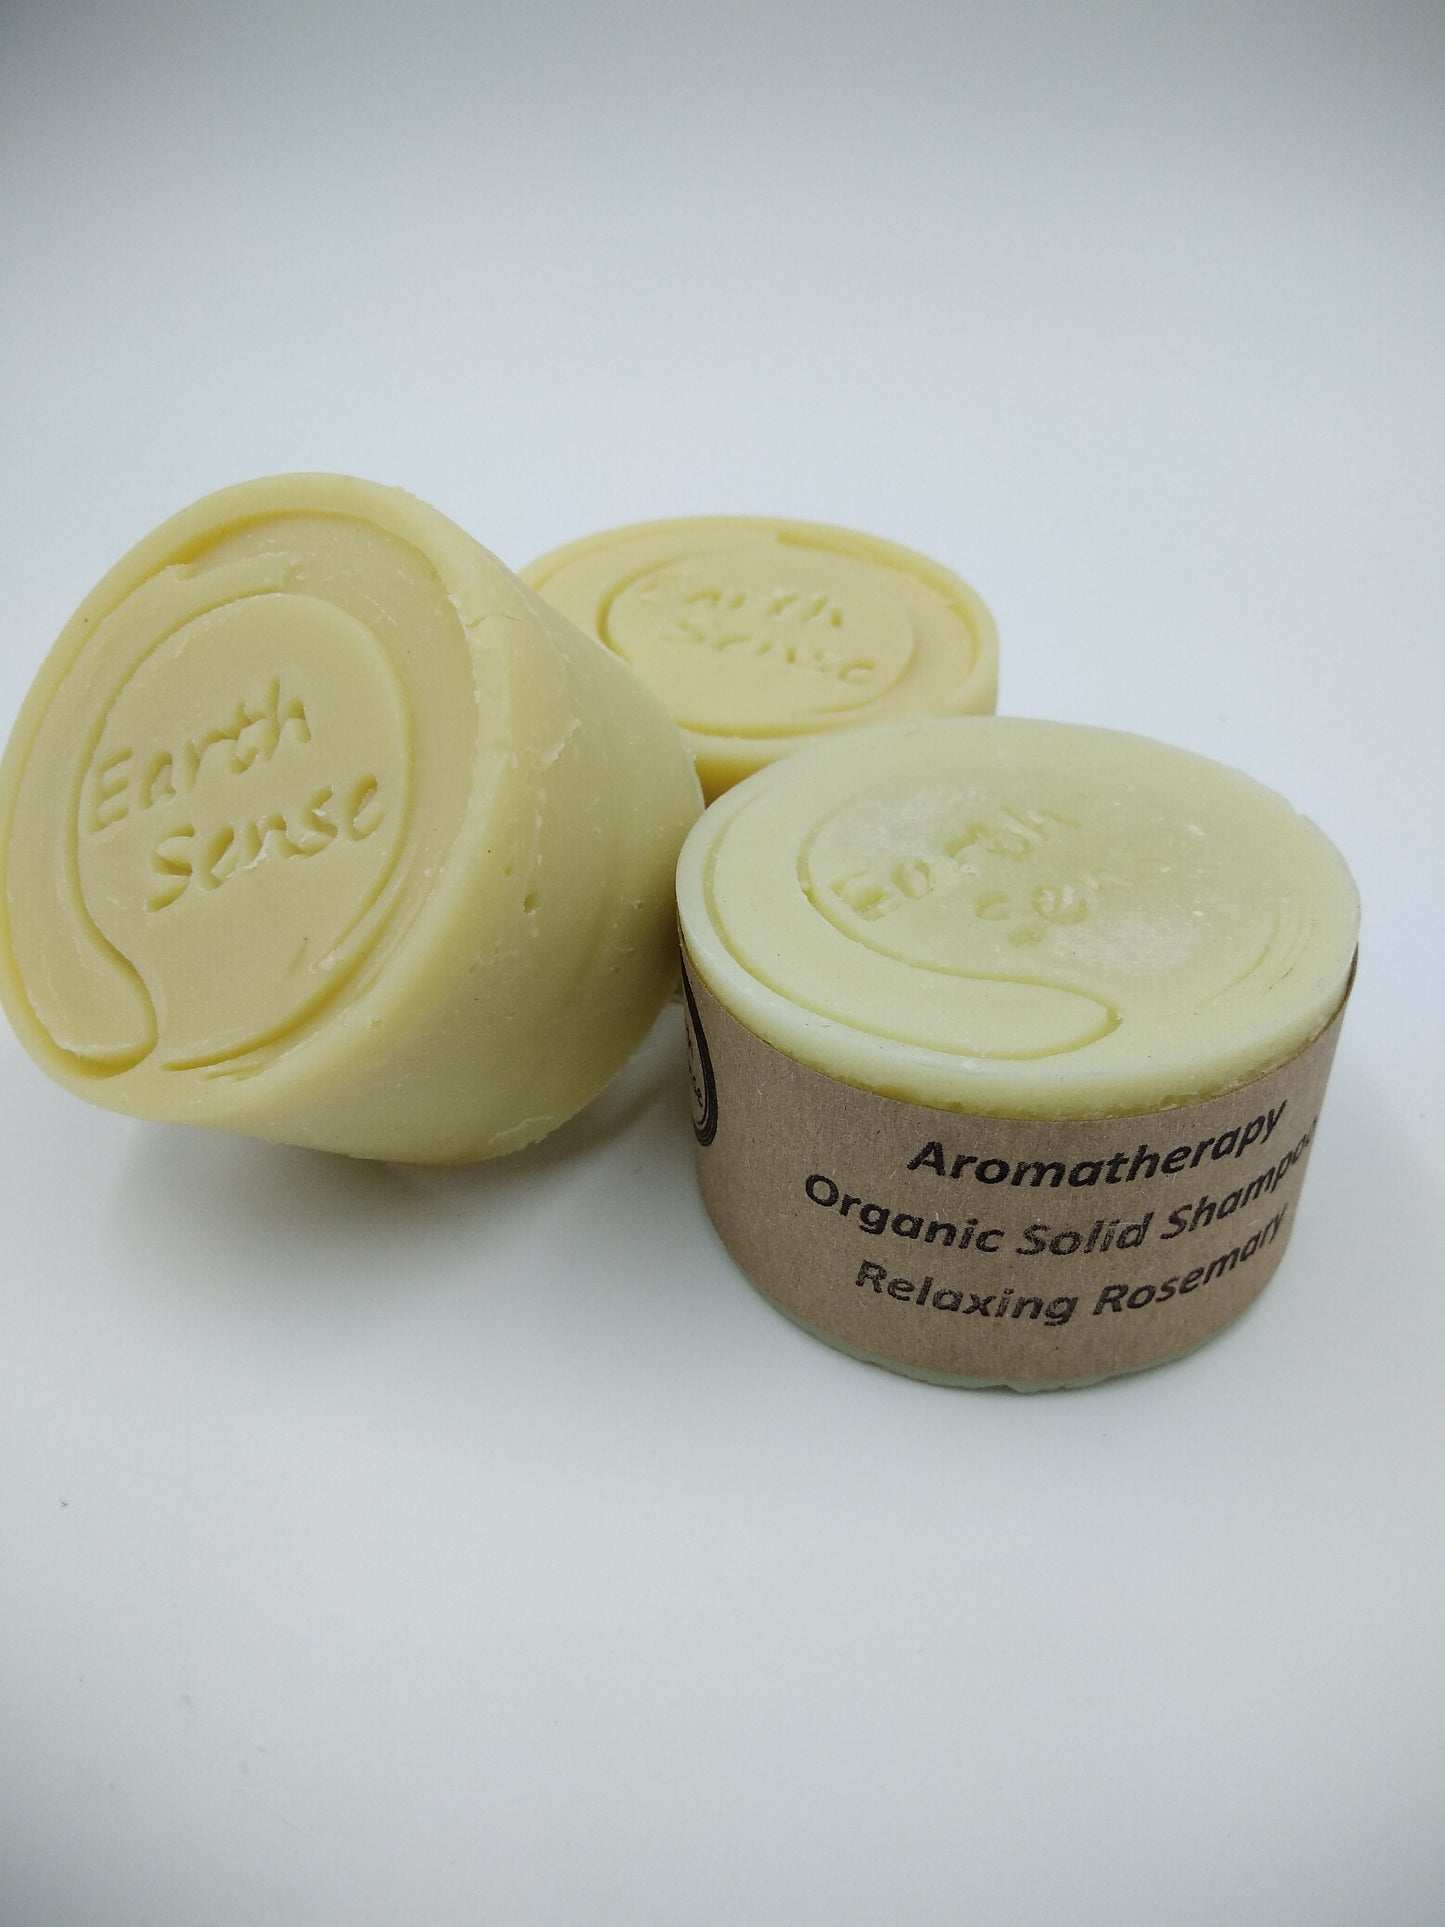 Organic Certified Balancing Solid Shampoo - Lavender & Rosemary - Dry & all Hair Types 60g - Earthsenseorganics